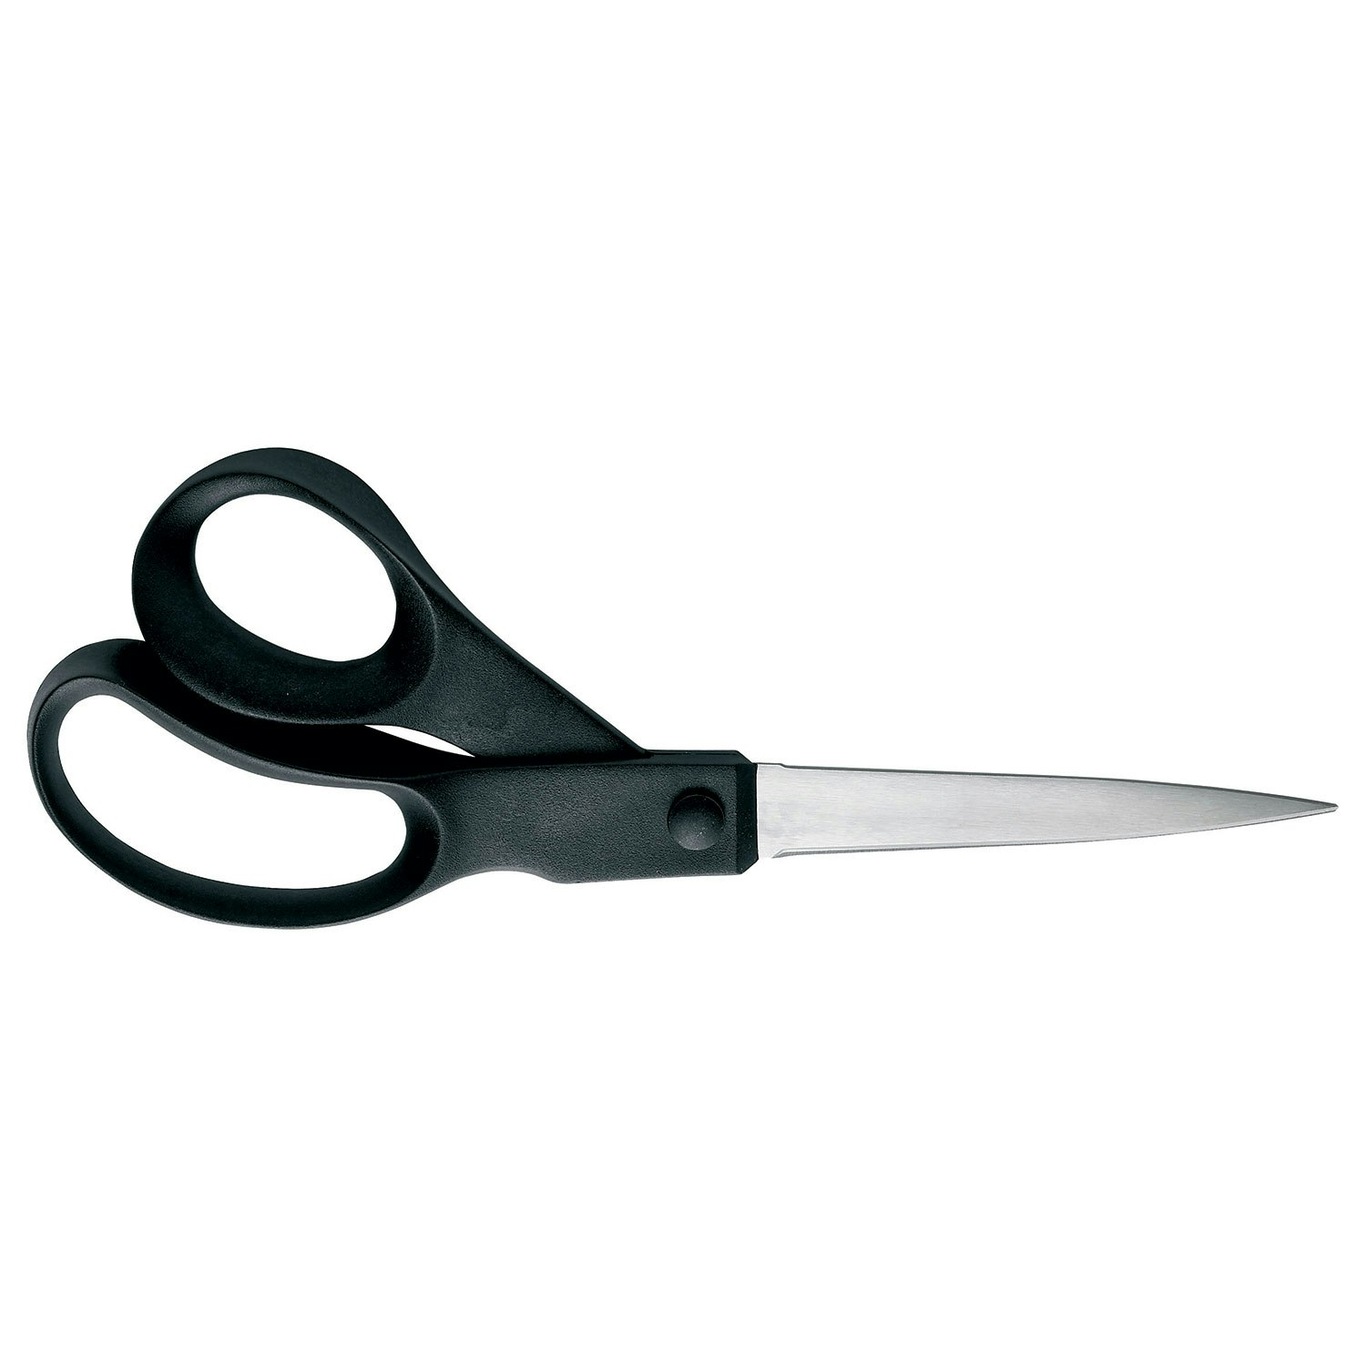 https://royaldesign.com/image/11/fiskars-essential-universal-scissors-21-cm-0?w=800&quality=80